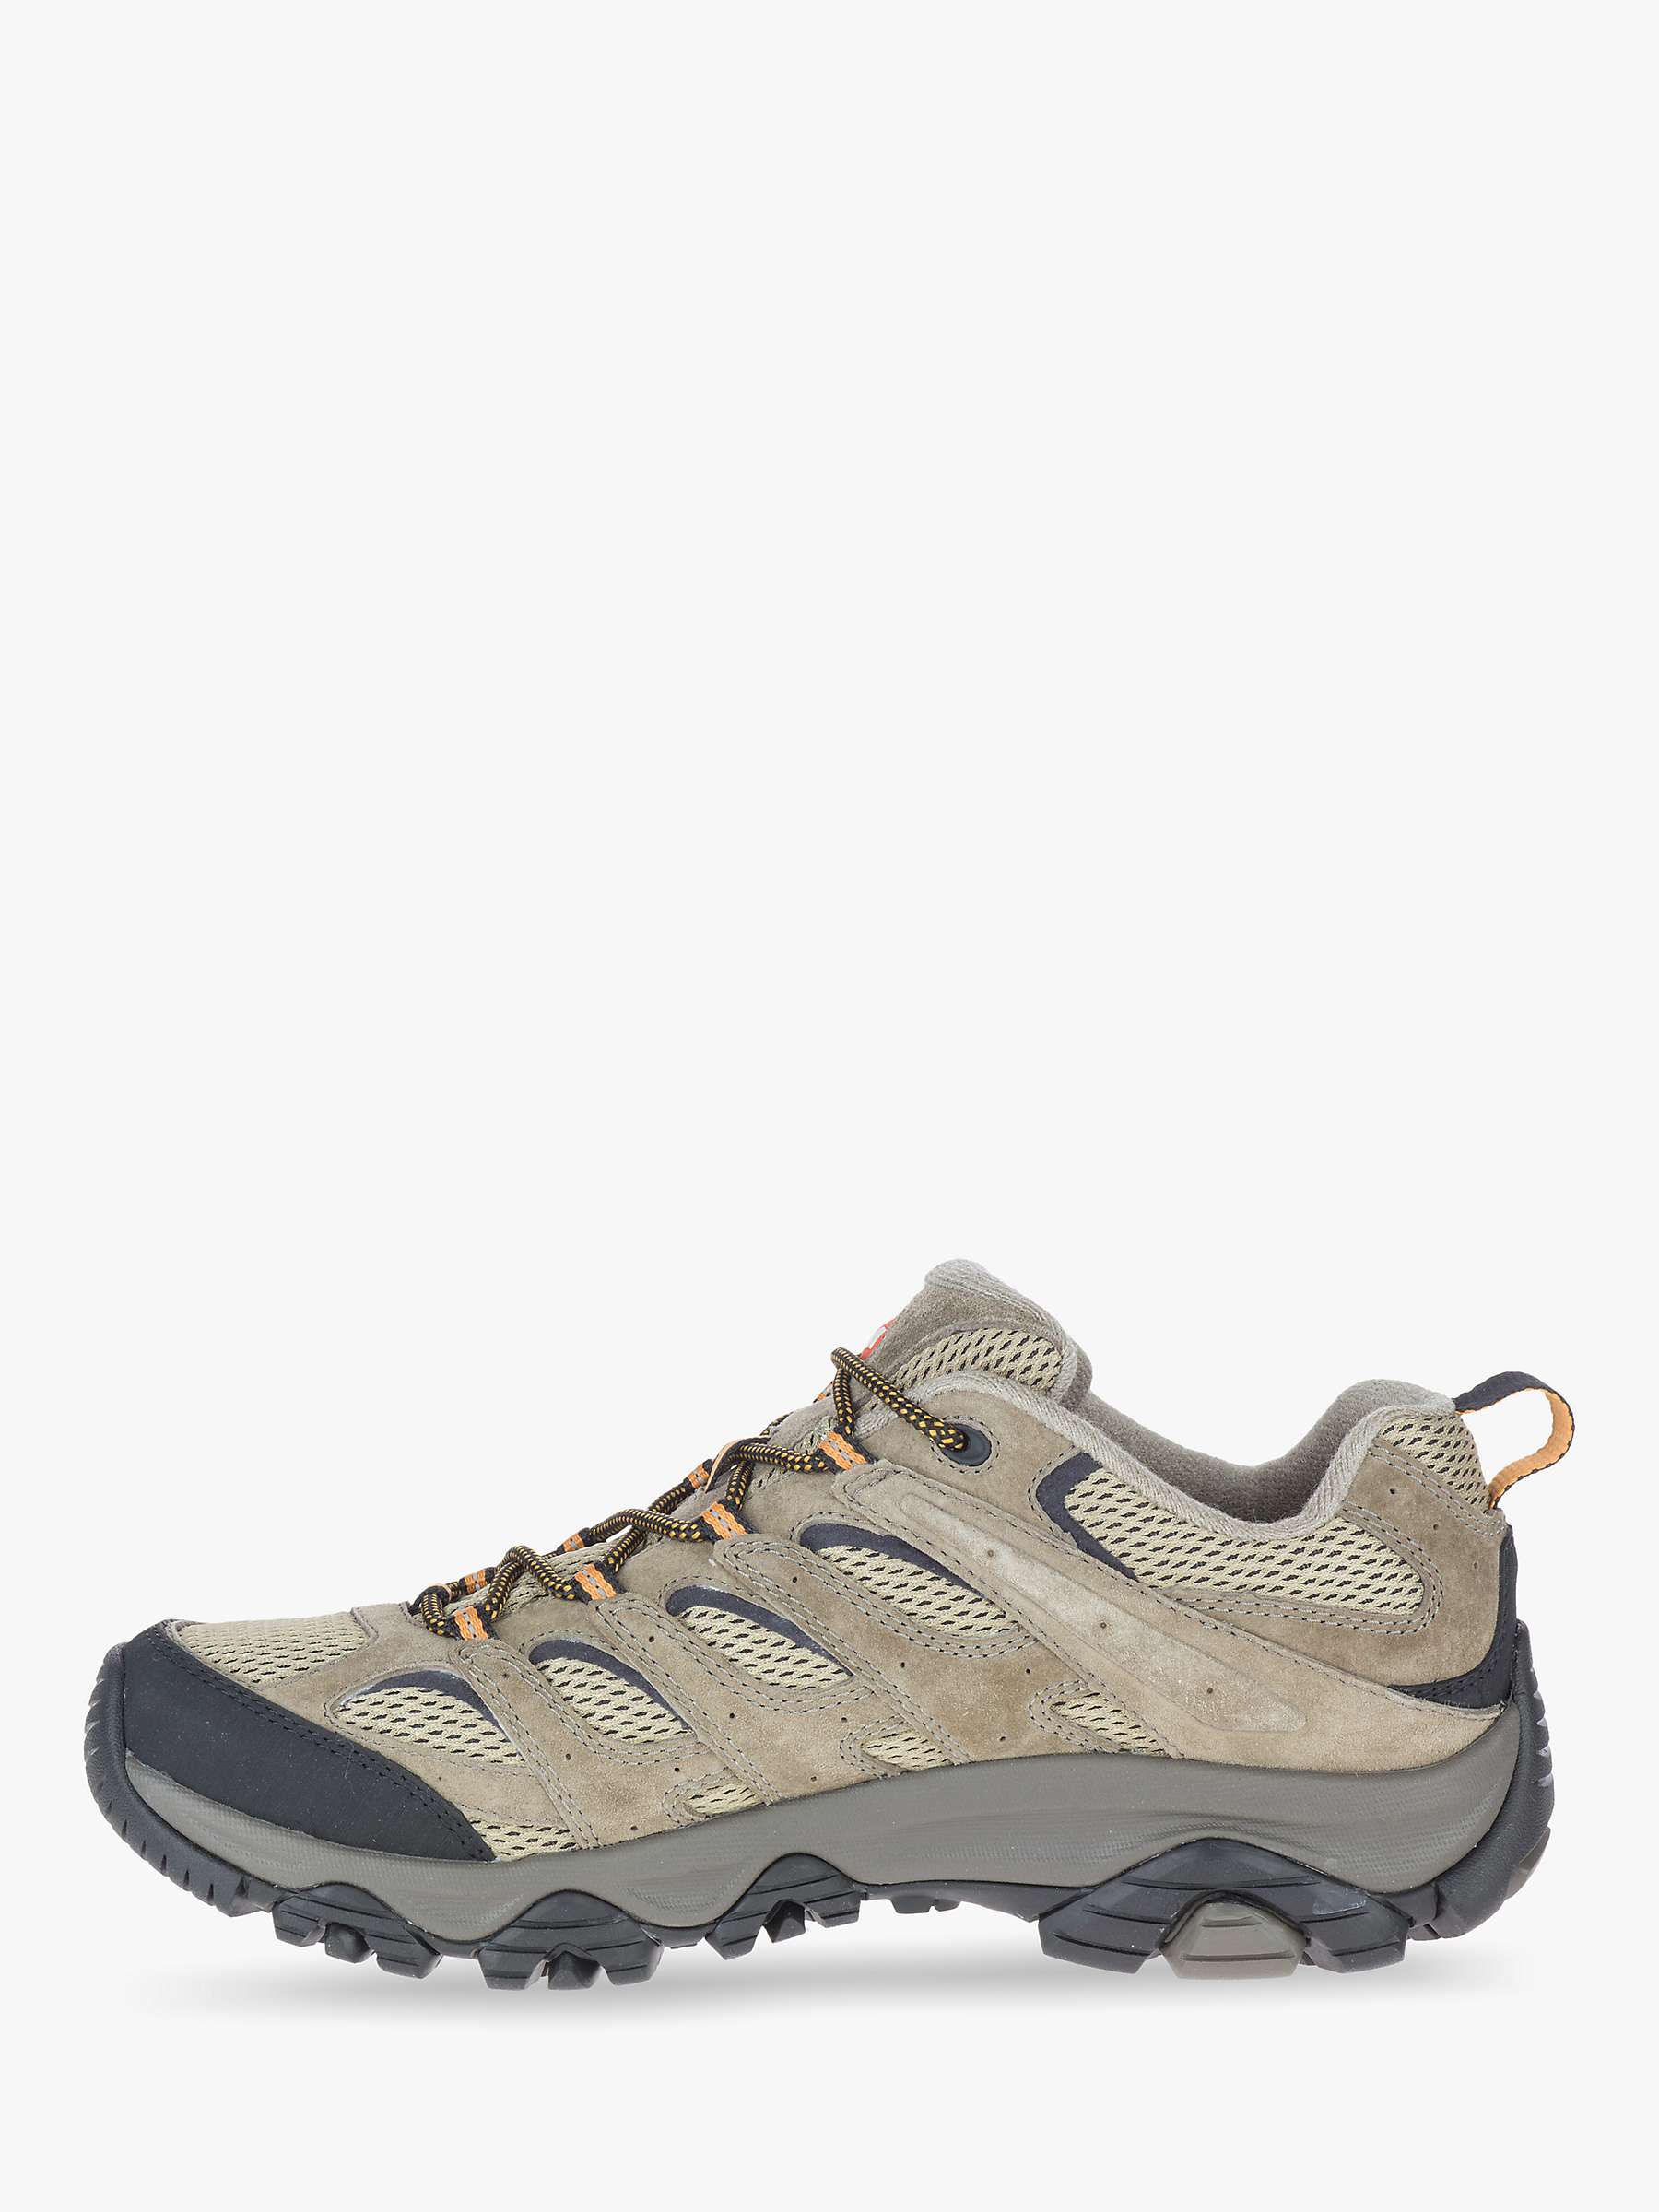 Buy Merrell MOAB 3 Men's Hiking Shoes, Pecan Online at johnlewis.com